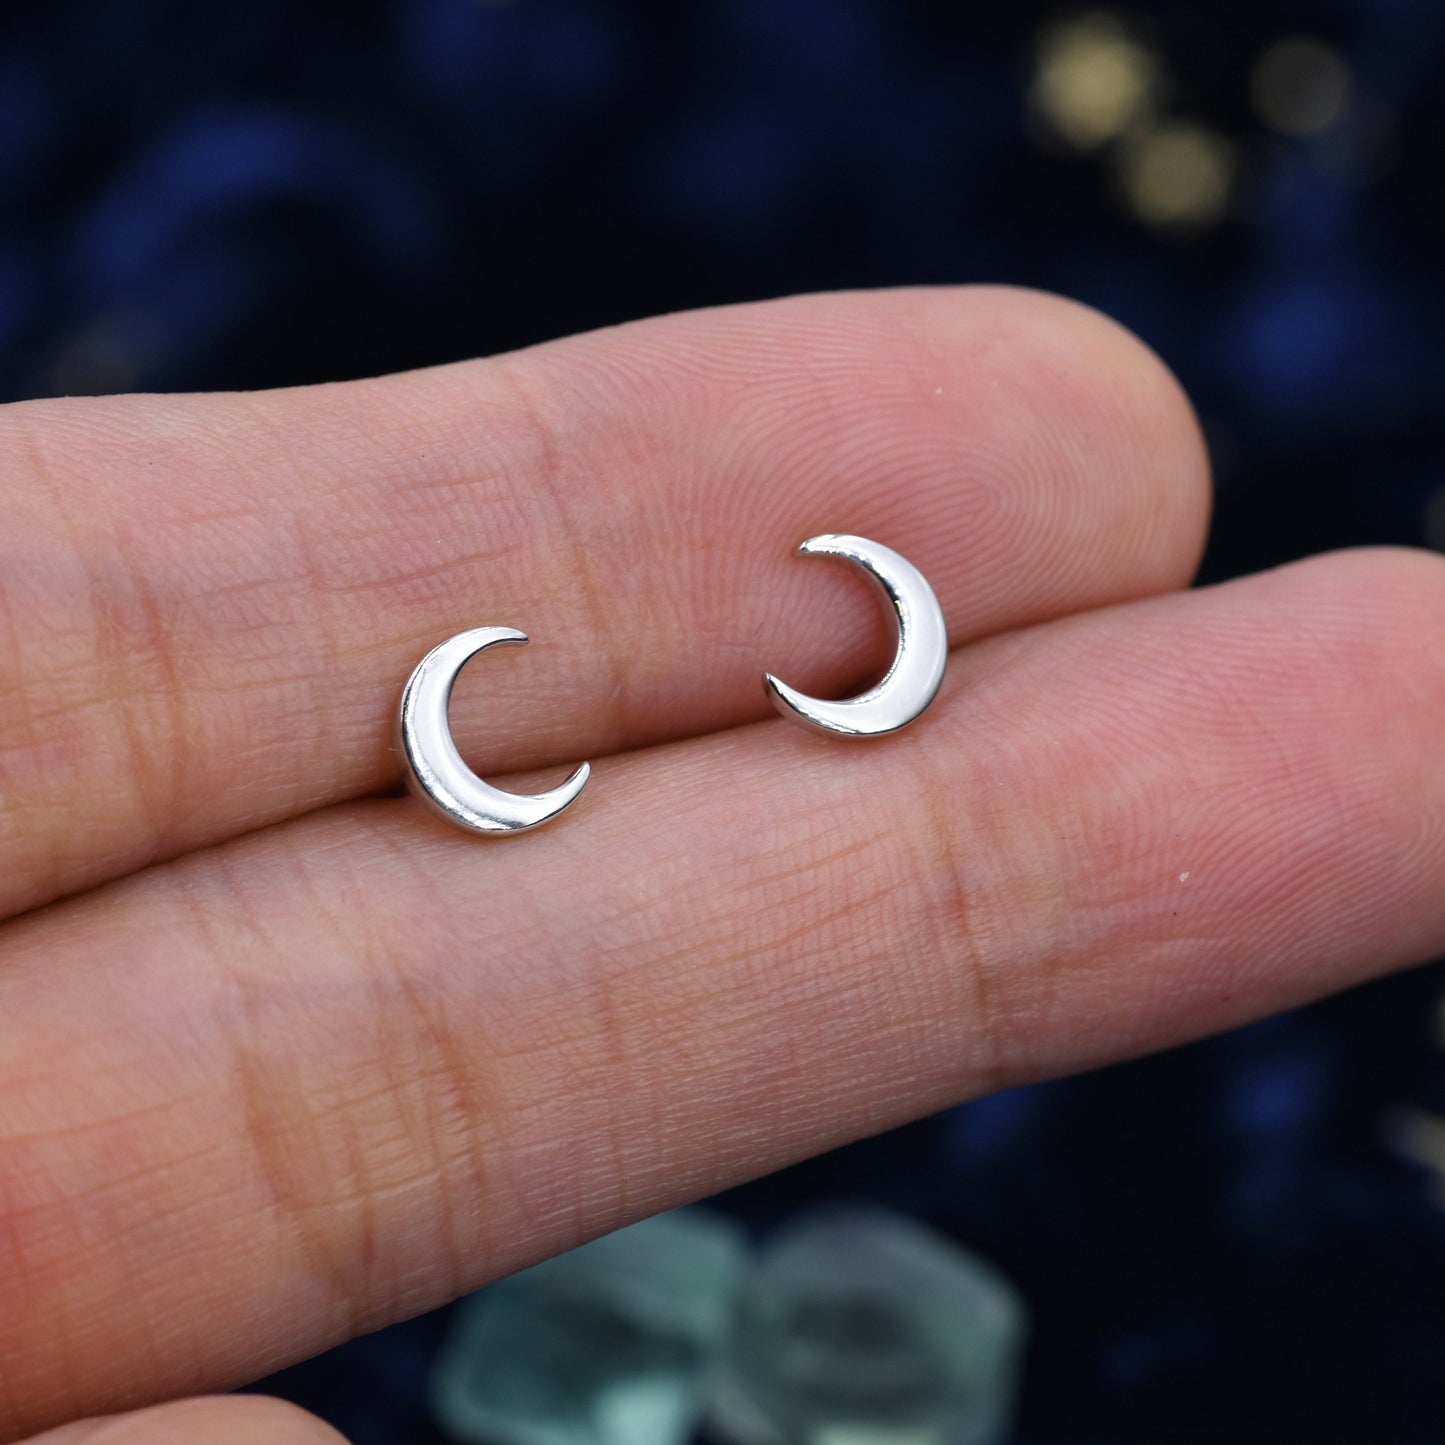 Crescent Moon Stud Earrings in Sterling Silver - Gold or Silver - New Moon Earrings - Petite Stud Earrings